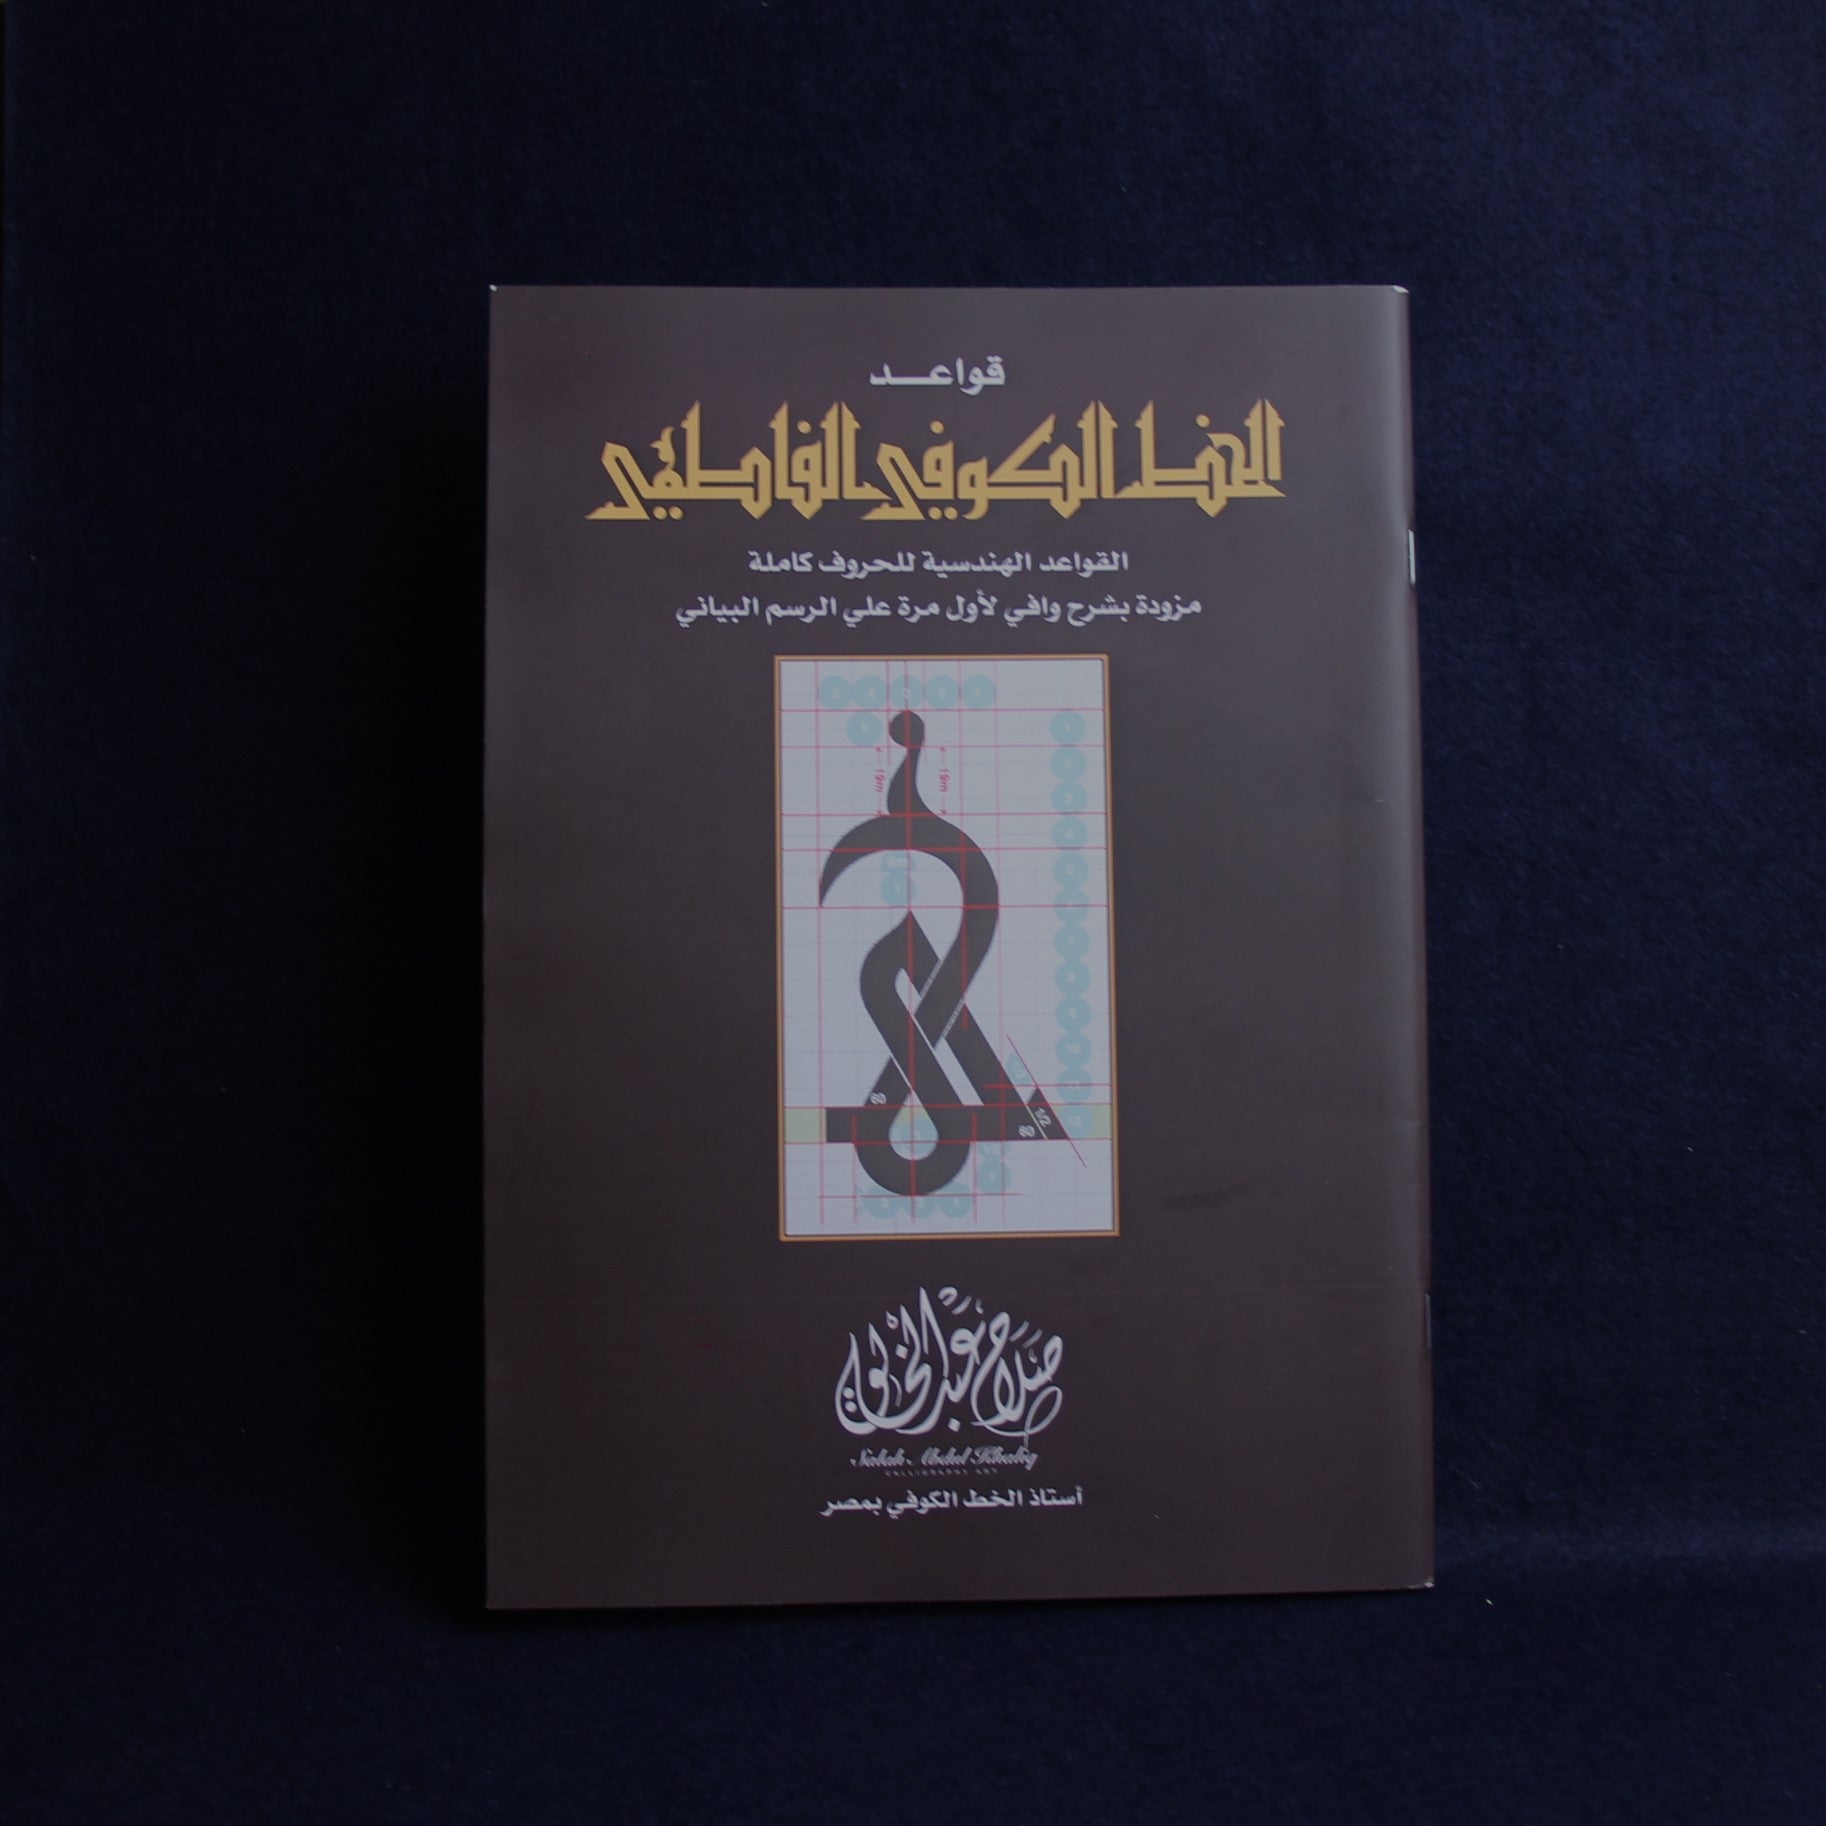 Rules of Fatimid Kufic script by Salah Abdul Khaleq